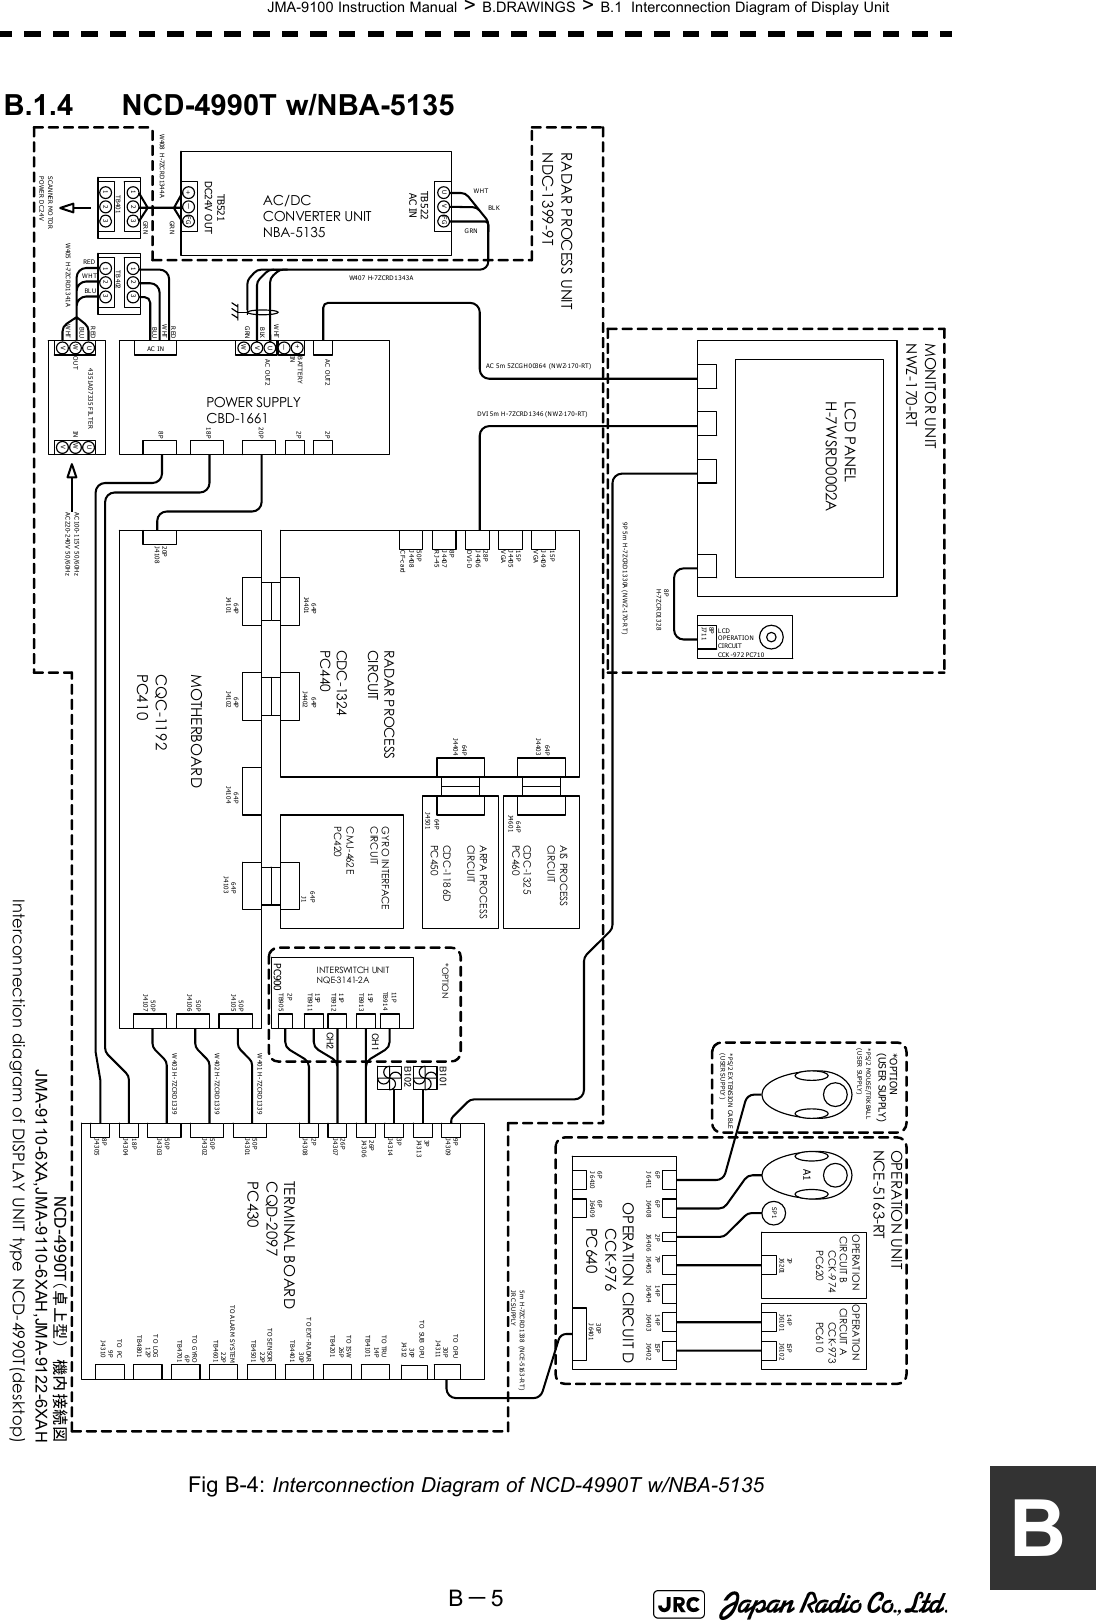 JMA-9100 Instruction Manual &gt; B.DRAWINGS &gt; B.1  Interconnection Diagram of Display UnitB－5BB.1.4 NCD-4990T w/NBA-5135Fig B-4: Interconnection Diagram of NCD-4990T w/NBA-51352PJ430826PJ430726PJ430650PJ430118PJ43048PJ43053PJ43133PJ43149PJ430914PTB4101TO TRUTO ISW26PTB4201TO EXT-RADAR30PTB4401TO S ENSOR22PTB4501TO A LARM  SYSTEM22PTB4601TO GYRO6PTB4701TO LOG12PTB4801TO PC9PJ4310TERMINAL BOARDCQD-2097PC43050PJ430250PJ430330PJ4311TO OPU30PJ4312TO SUB OPU6PJ 64116PJ 64106PJ64096PJ64082PJ64067PJ640514PJ640414PJ640315 PJ640230PJ6401OPERATION CIRCUIT D      CCK-976      PC64014PJ610115 PJ6102OPERATION  CIRCUI T  A        CCK-973        PC6107PJ6201OPERATION  CIRC UI T B       CCK -974       PC620SP1A1*PS/2 EX TENSION  CA BLE(USER SUPPLY )OPERATION UNITNC E -51 6 3- RT5 m  H -7Z C RD 1 33 8  ( N CE - 5 16 3 - R T )JRC SU PPLYB101B102PC90011PTB91415PTB91311PTB91215PTB9112PTB905INTERSWITCH UNITNQE-3141-2ACH1CH250PJ410550PJ410650PJ4107*OPTIONW401 H -7ZCRD1339W402 H -7ZCRD1339W403 H -7ZCRD133964PJ41 0364PJ410464PJ 410264PJ410164PJ440164PJ 440264PJ1GYRO INTERFACECIRCUITC MJ -462 EPC420RADAR P ROCESSCI RC UITCDC- 1324PC440MOTHERBOARDCQC-119 2PC41064PJ440364PJ4404AIS PROCESSCIRCU ITCDC -1 32 5PC 46 064PJ460164PJ4501ARPA PROCESSCIRCU ITCDC -1 18 6DPC 45 015PJ4409VGA15PJ4405VGA28PJ4406DVI-D8PJ4407RJ-4550PJ4408CF-cardLCDOPERATIONCIRCUITCCK -972 PC71 08PJ71 1MONITOR UNITNWZ-170-RTLCD PANELH-7WSRD0002A8PH-7ZCR D13289P 5m  H-7ZCRD1330A  (NWZ-170-R T)DVI 5m  H-7ZCRD1346 (NWZ-170-RT)20PJ41088PPOWER SUPPLYCBD-166118P20P*PS/2 MOUSE/TRKBALL(USER SUPPLY)*OPTION(USER SUPPLY)2P2PAC OUT2+ーUVWB ATTERYINAC OUT2AC INUWVUWV4351A07335 FILTERINOUTREDWHTBLUREDWHTBLUAC 5m 5ZCGH00364 (NWZ-170-RT)U V FG+ーFGTB 5 22AC INTB52 1DC2 4V OUTAC/DC CONVERTER UNITNBA-5135AC100-115V 50/60HzAC220-240V 50/60HzSCAN NER MOTORPOWER  DC24VNCD-4990T（卓上型）　機内接続図Interconnection diagram of DISPLAY UNIT type NCD-4990T(desktop)JMA-9110-6XA,JMA-9110-6XAH,JMA-9122-6XAHRADAR PROCESS UNITNDC-1399-9T1 2 31 2 3REDBLUWHTW405 H -7ZC RD1341ATB 4021 2 31 2 3TB401W408 H -7ZC RD1344AGR NGR NW407 H-7ZCRD 1343AWHTBLKGRNWHTBLKGRN